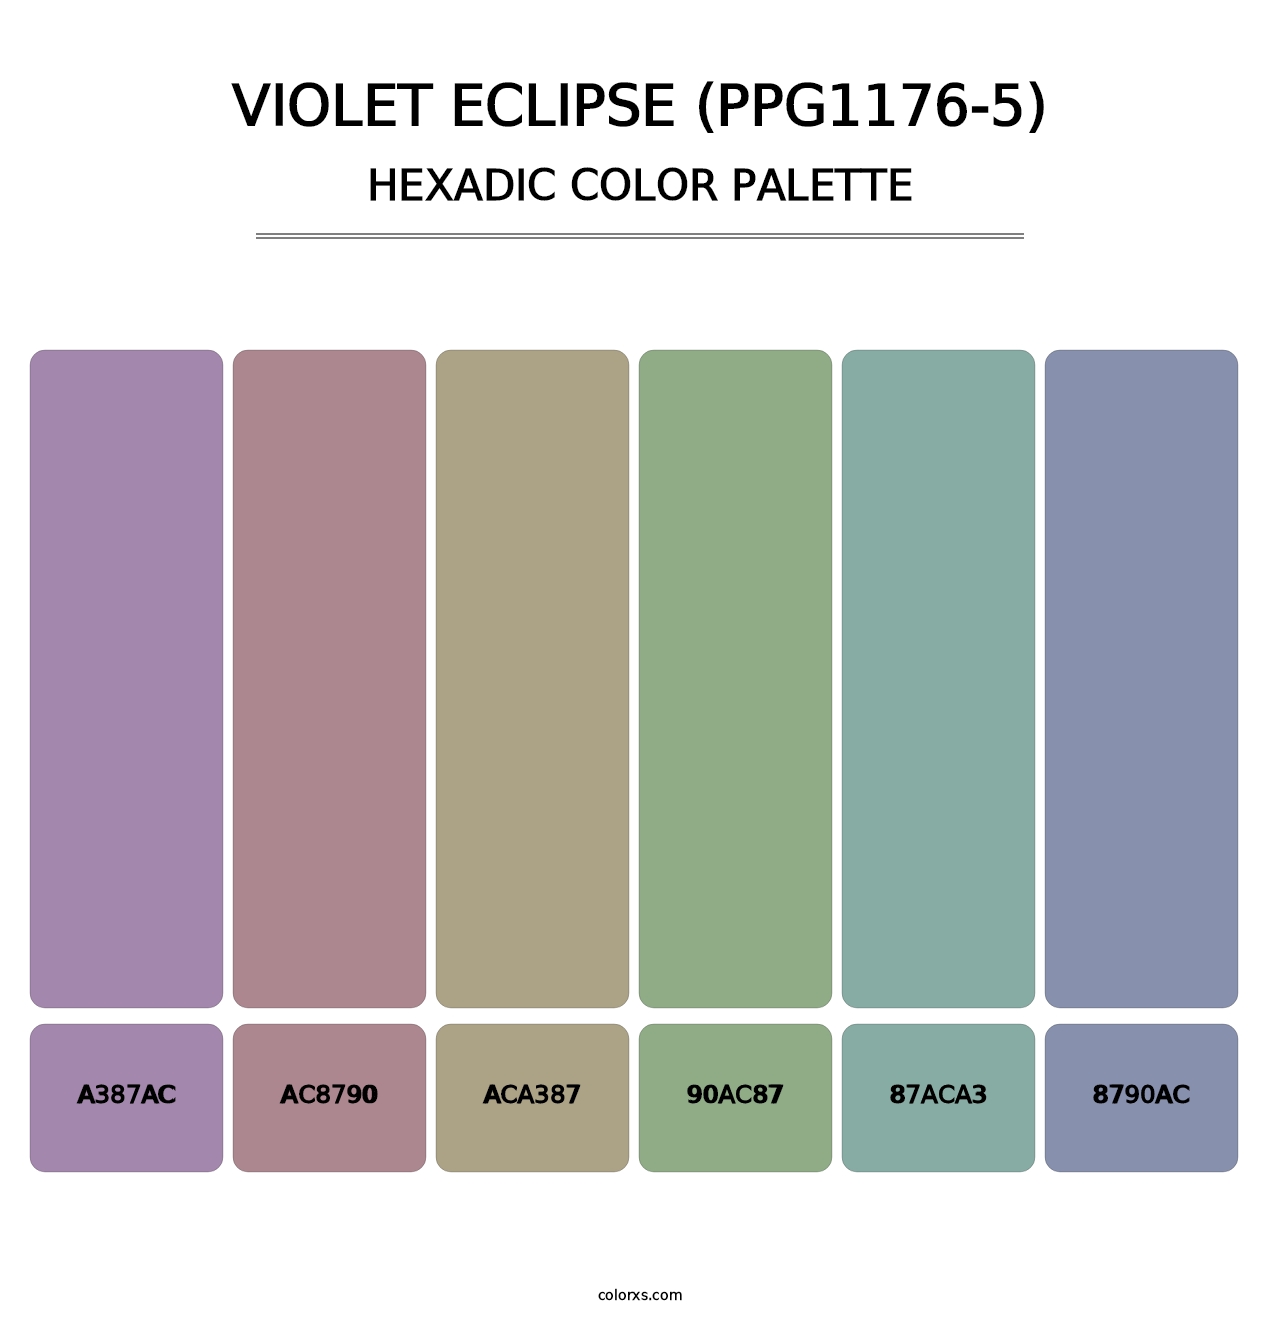 Violet Eclipse (PPG1176-5) - Hexadic Color Palette